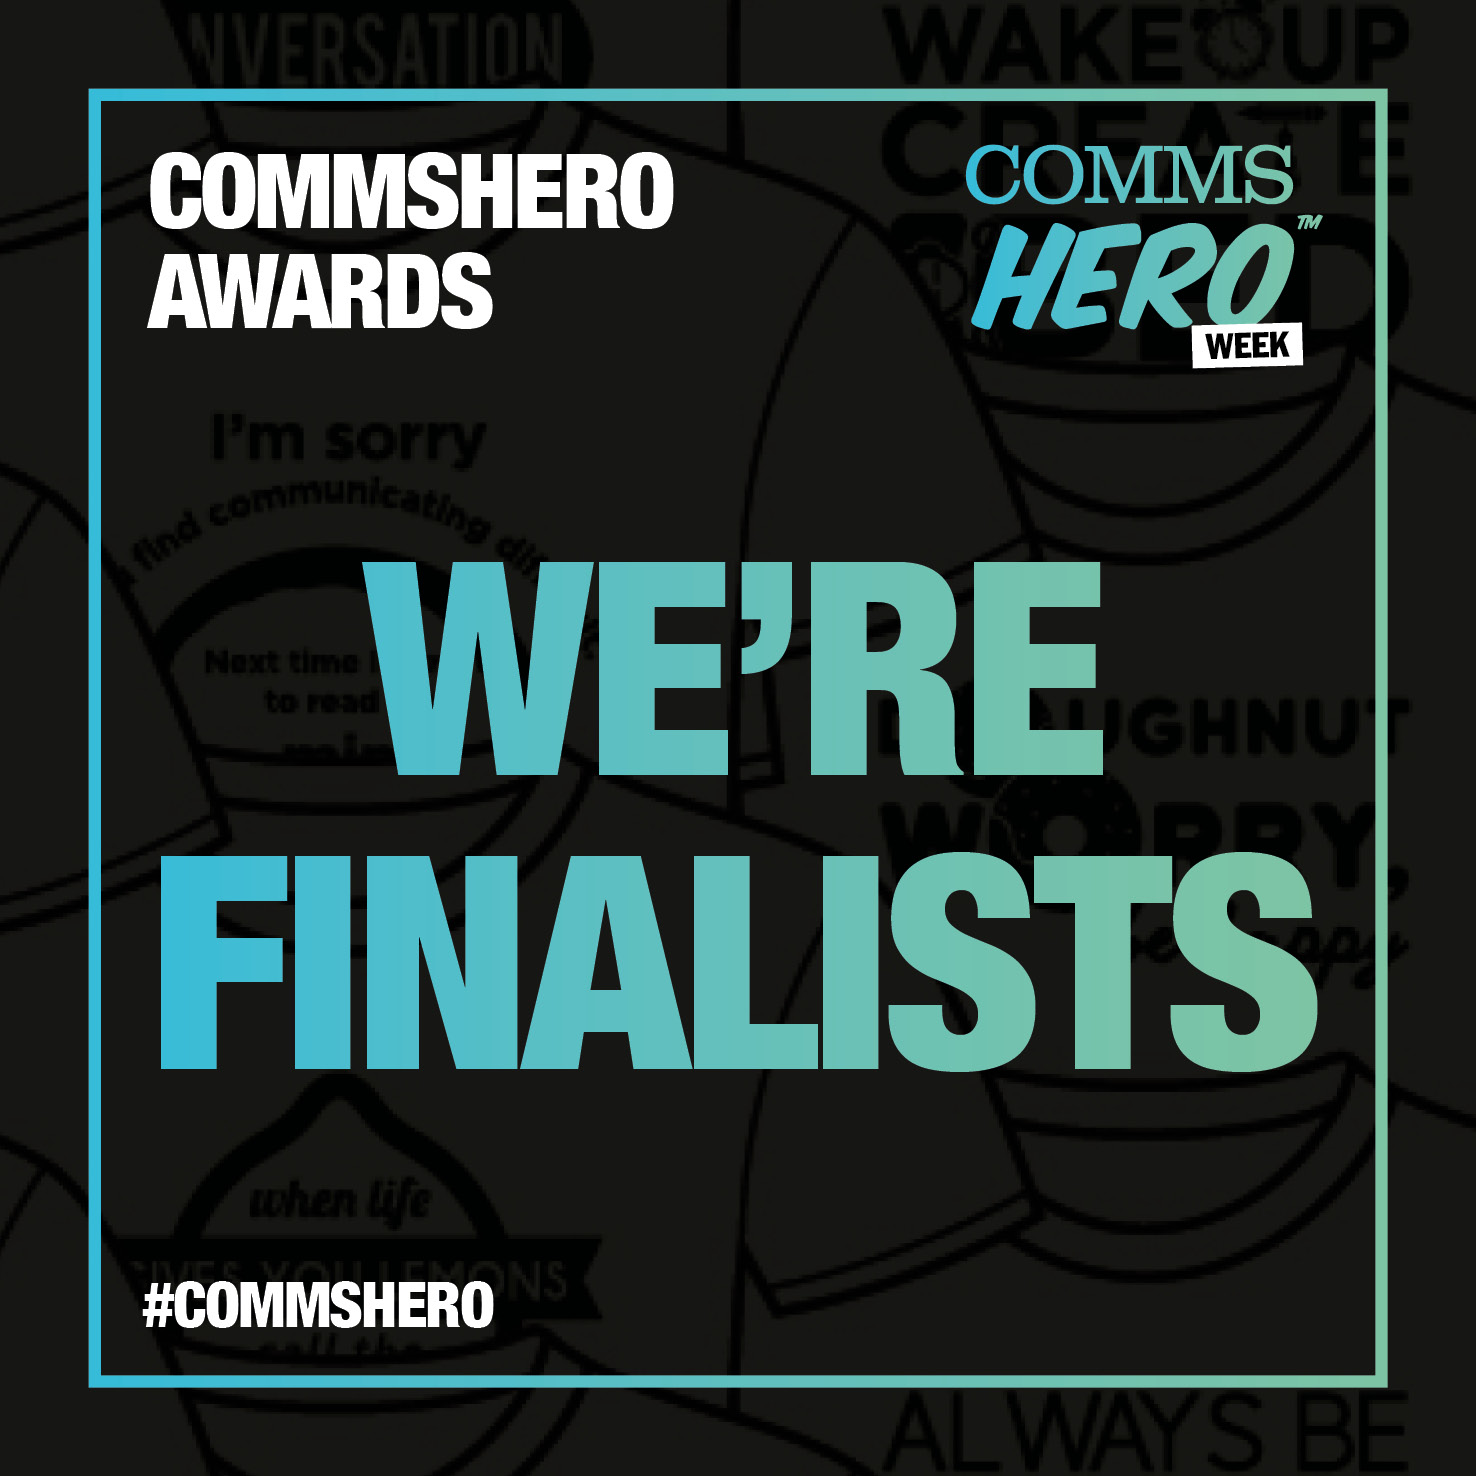 COMMSHERO AWARDS - We're Finalists